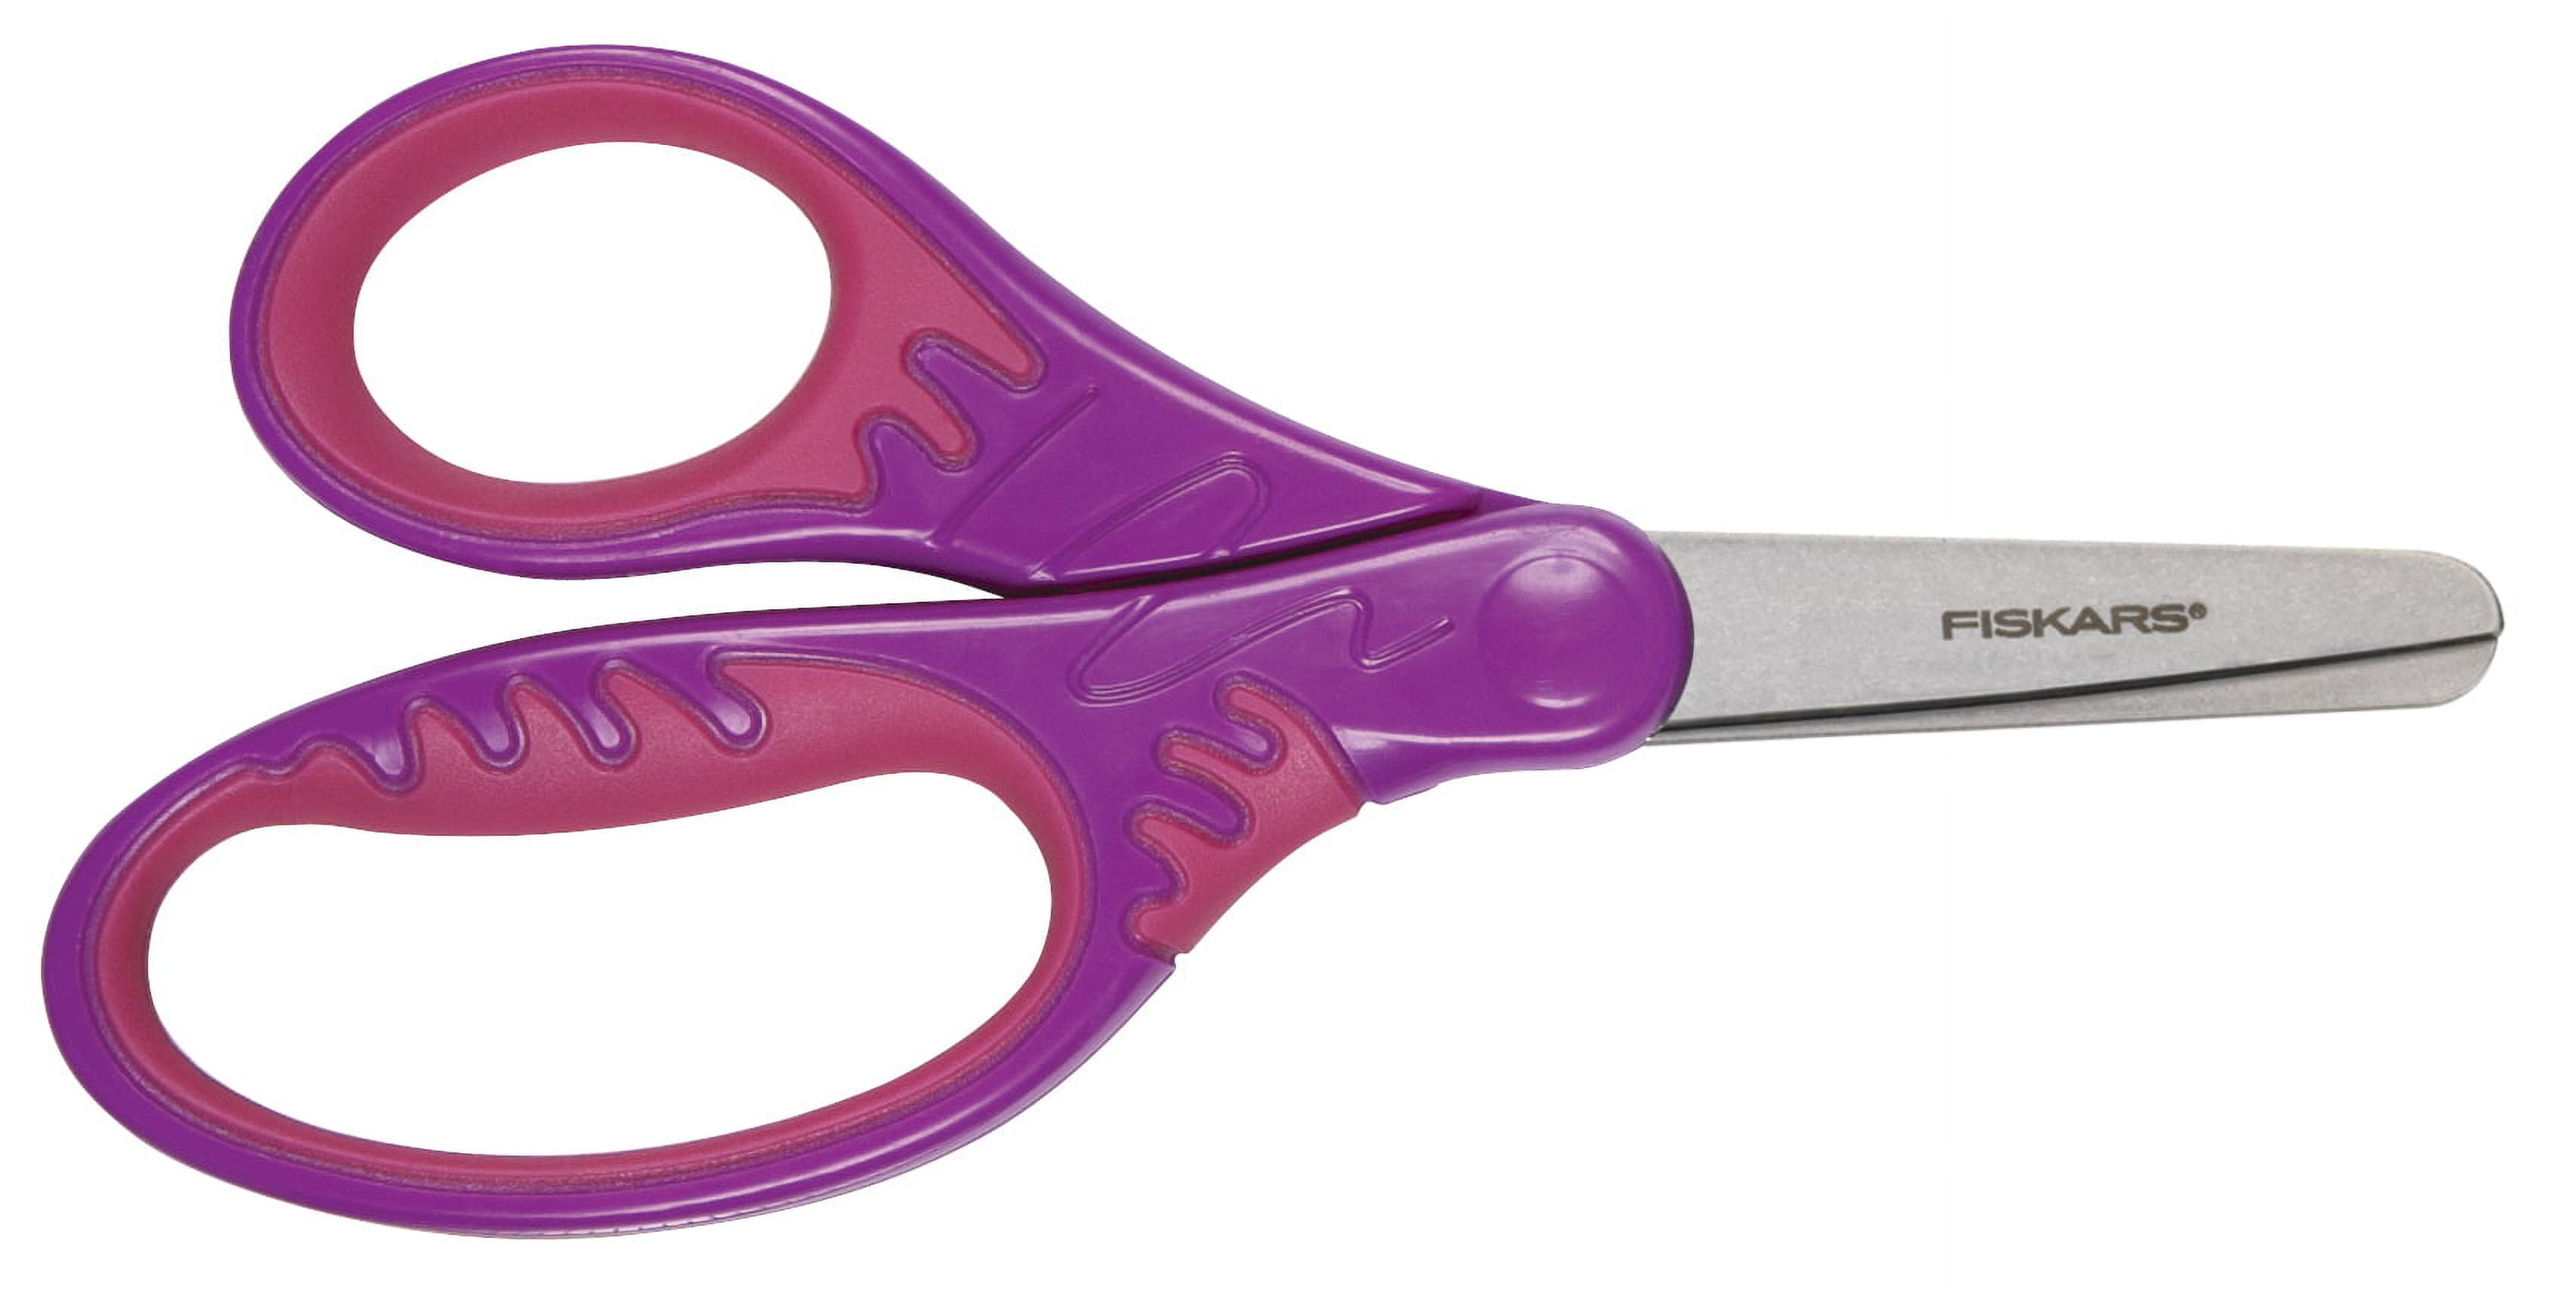 Fiskars 5 Blunt Kids Scissors with Eraser Sheath, Purple (Ages 4+)